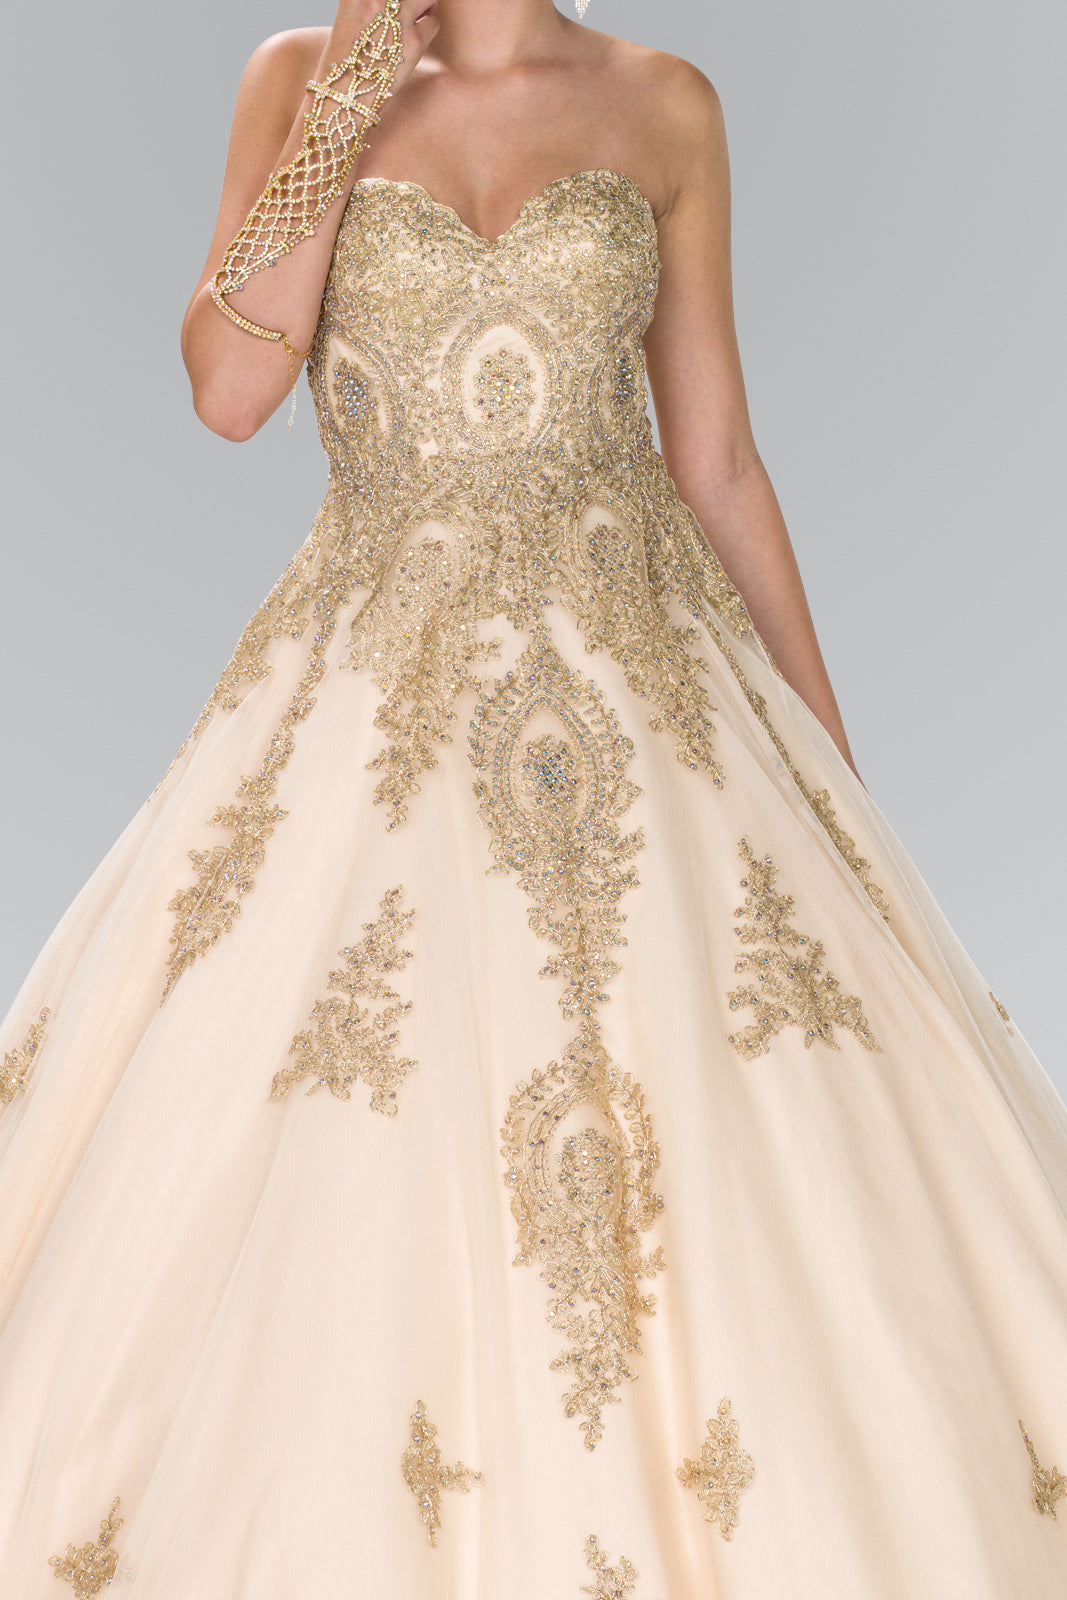 Elizabeth K - GL2379 - Embroidery Tulle Sweetheart Quinceanera Dress